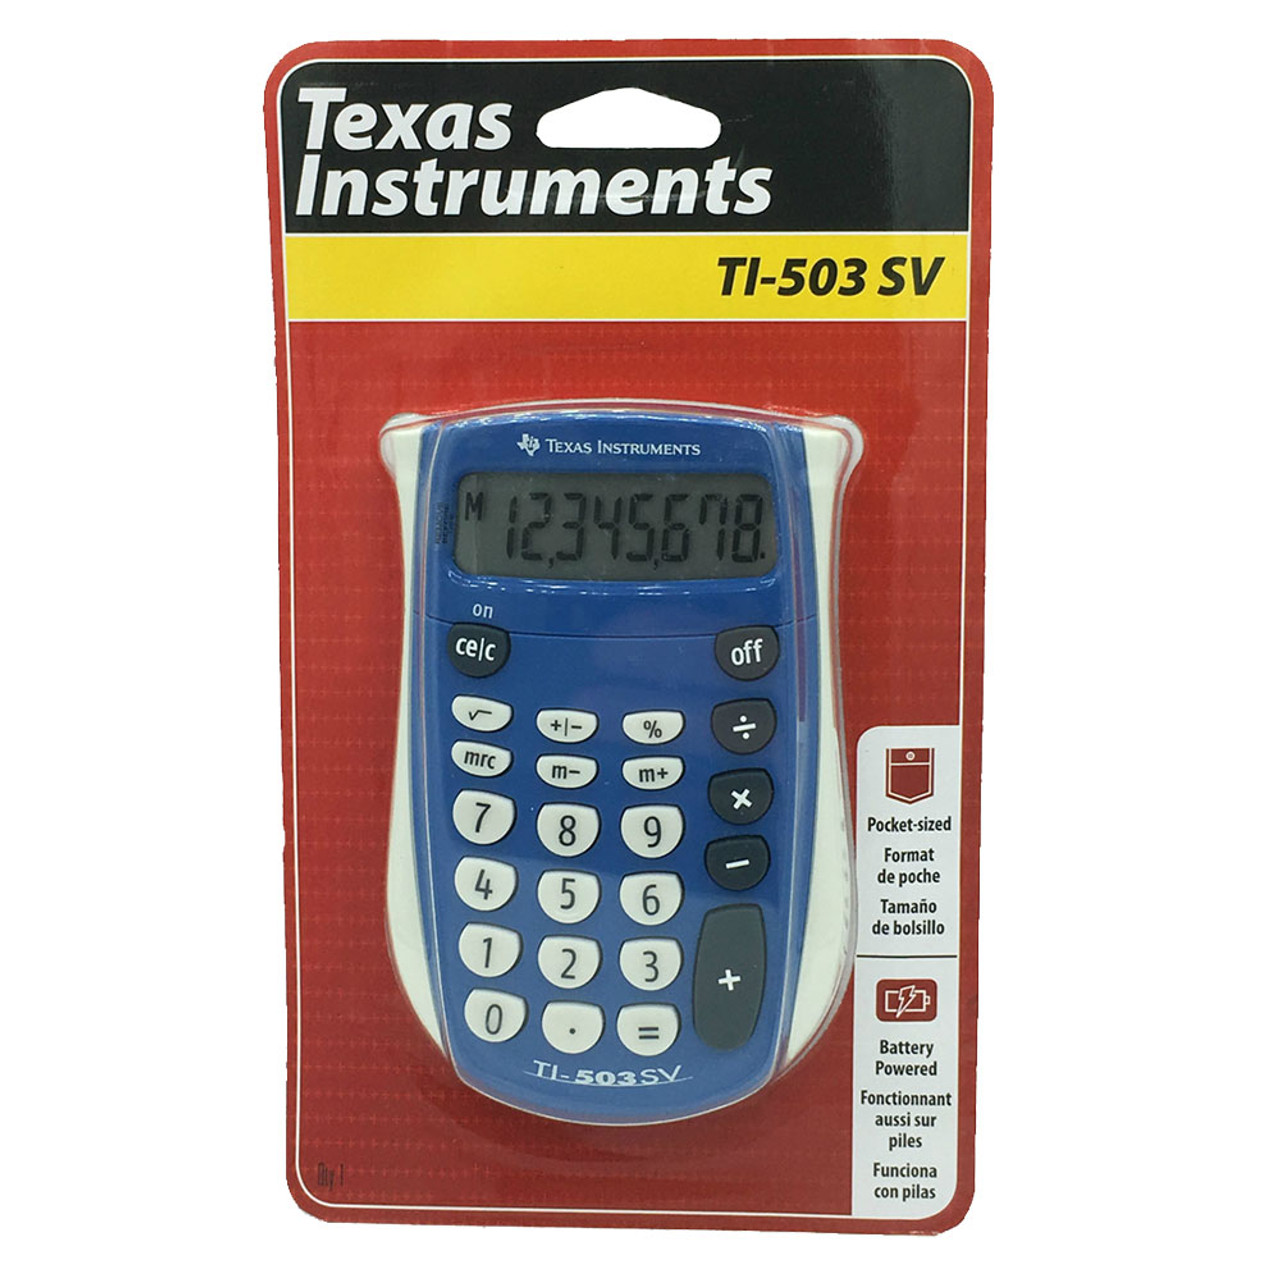 Texas Instruments TI-503 SV Pocket-Sized Calculator